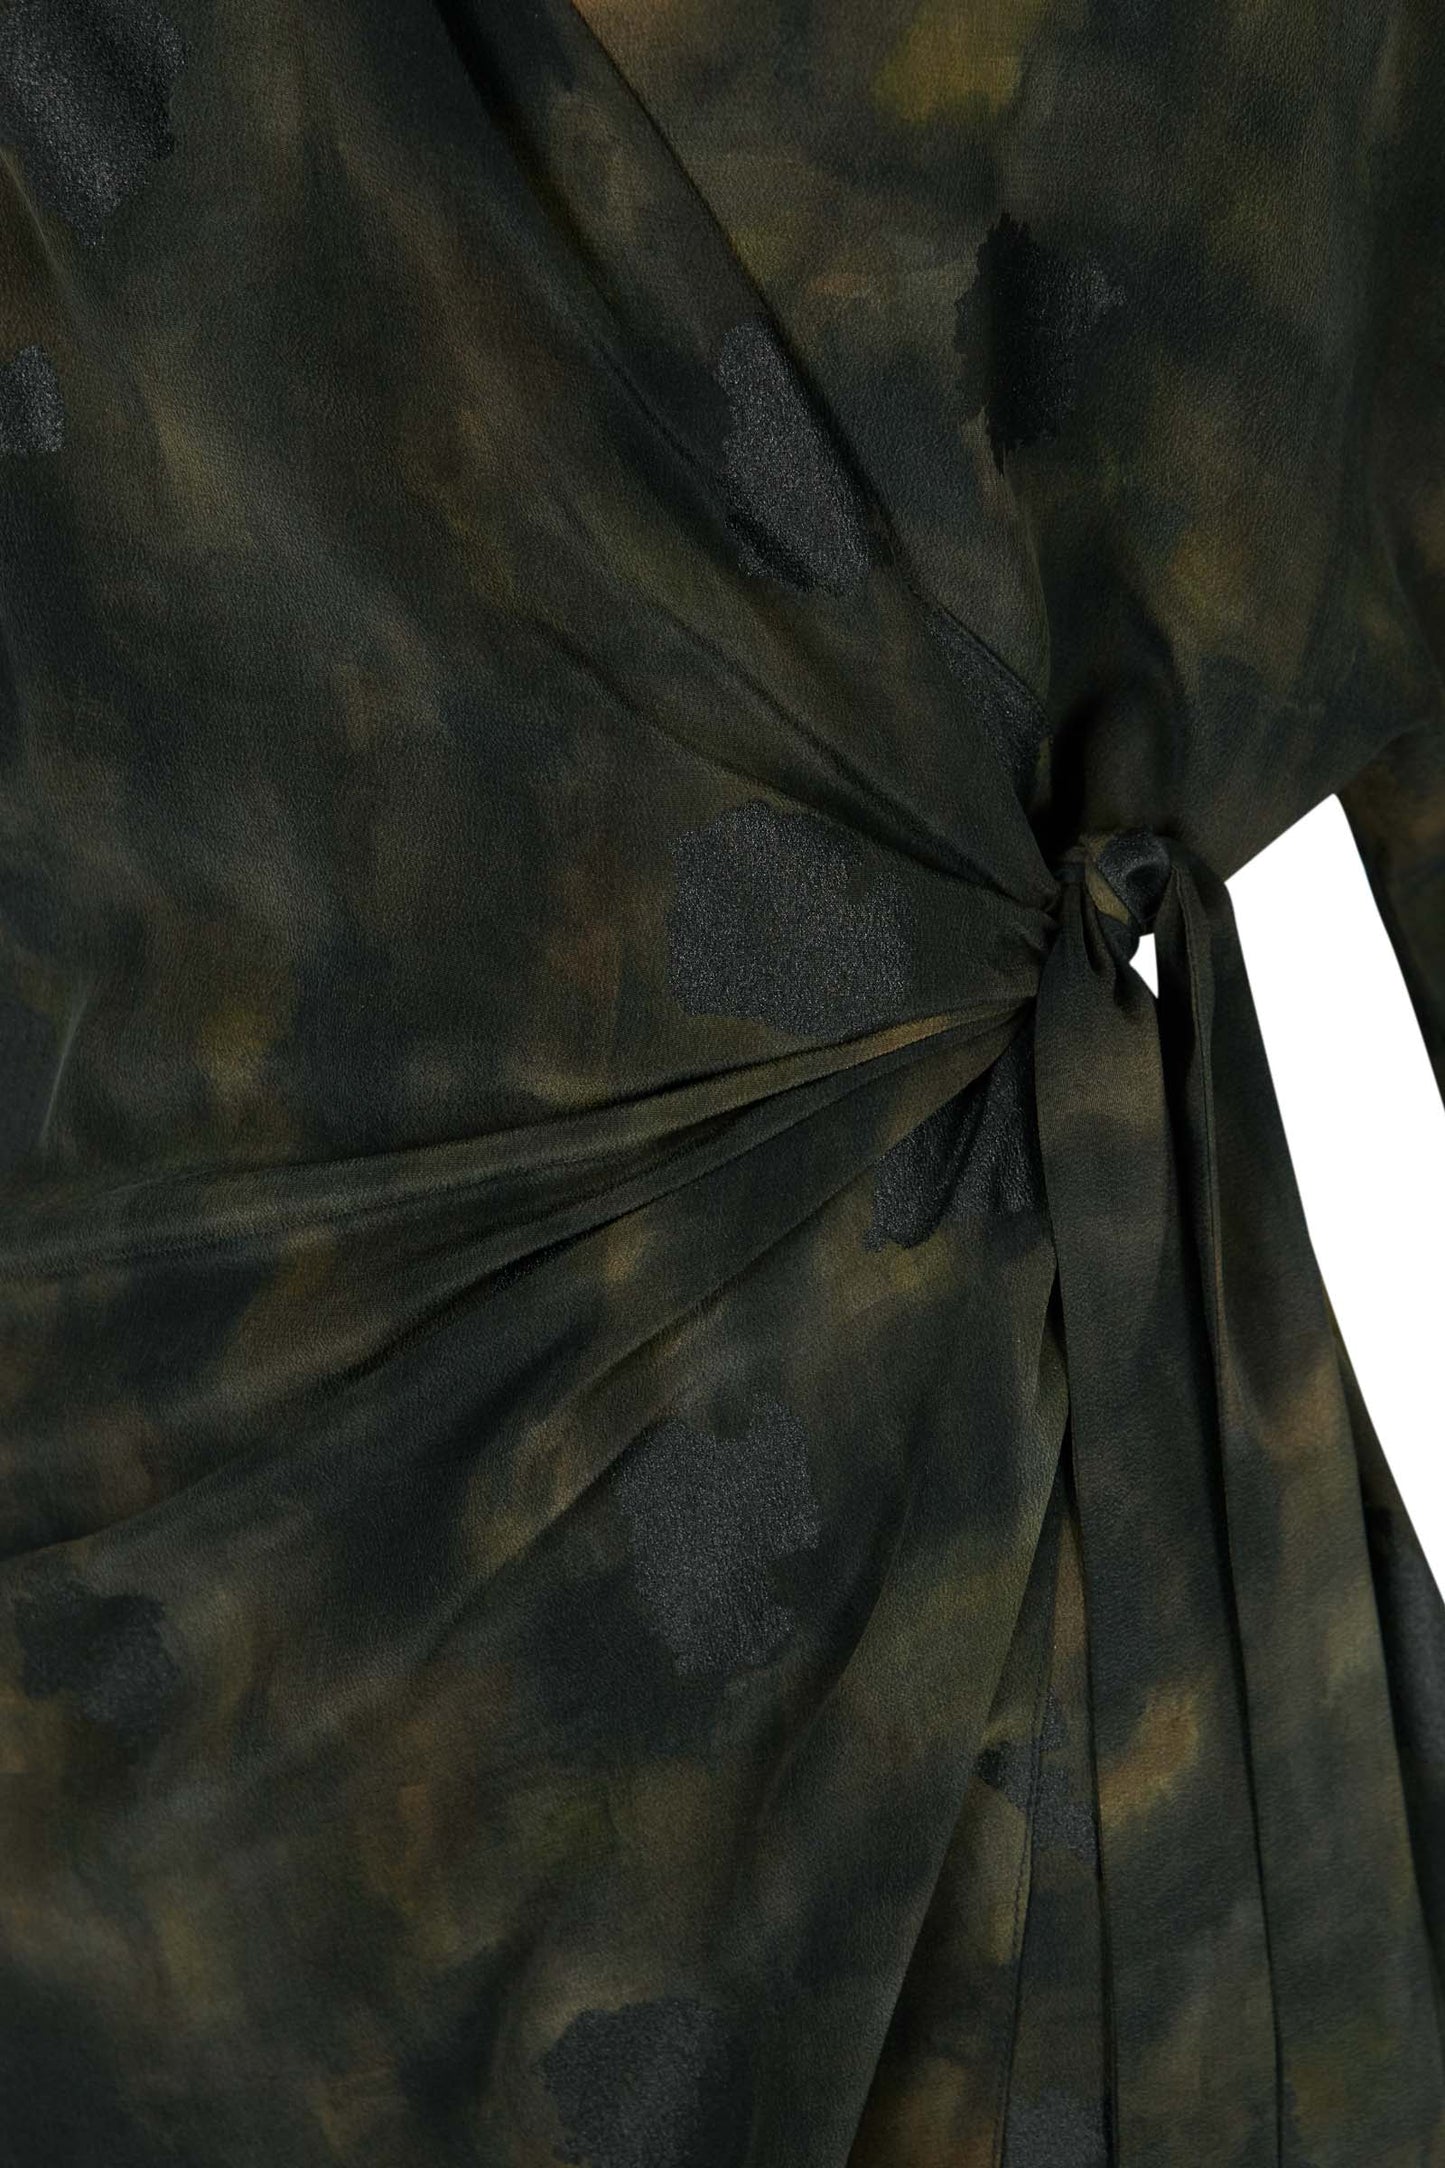 Karlie, Klimt print silk dress